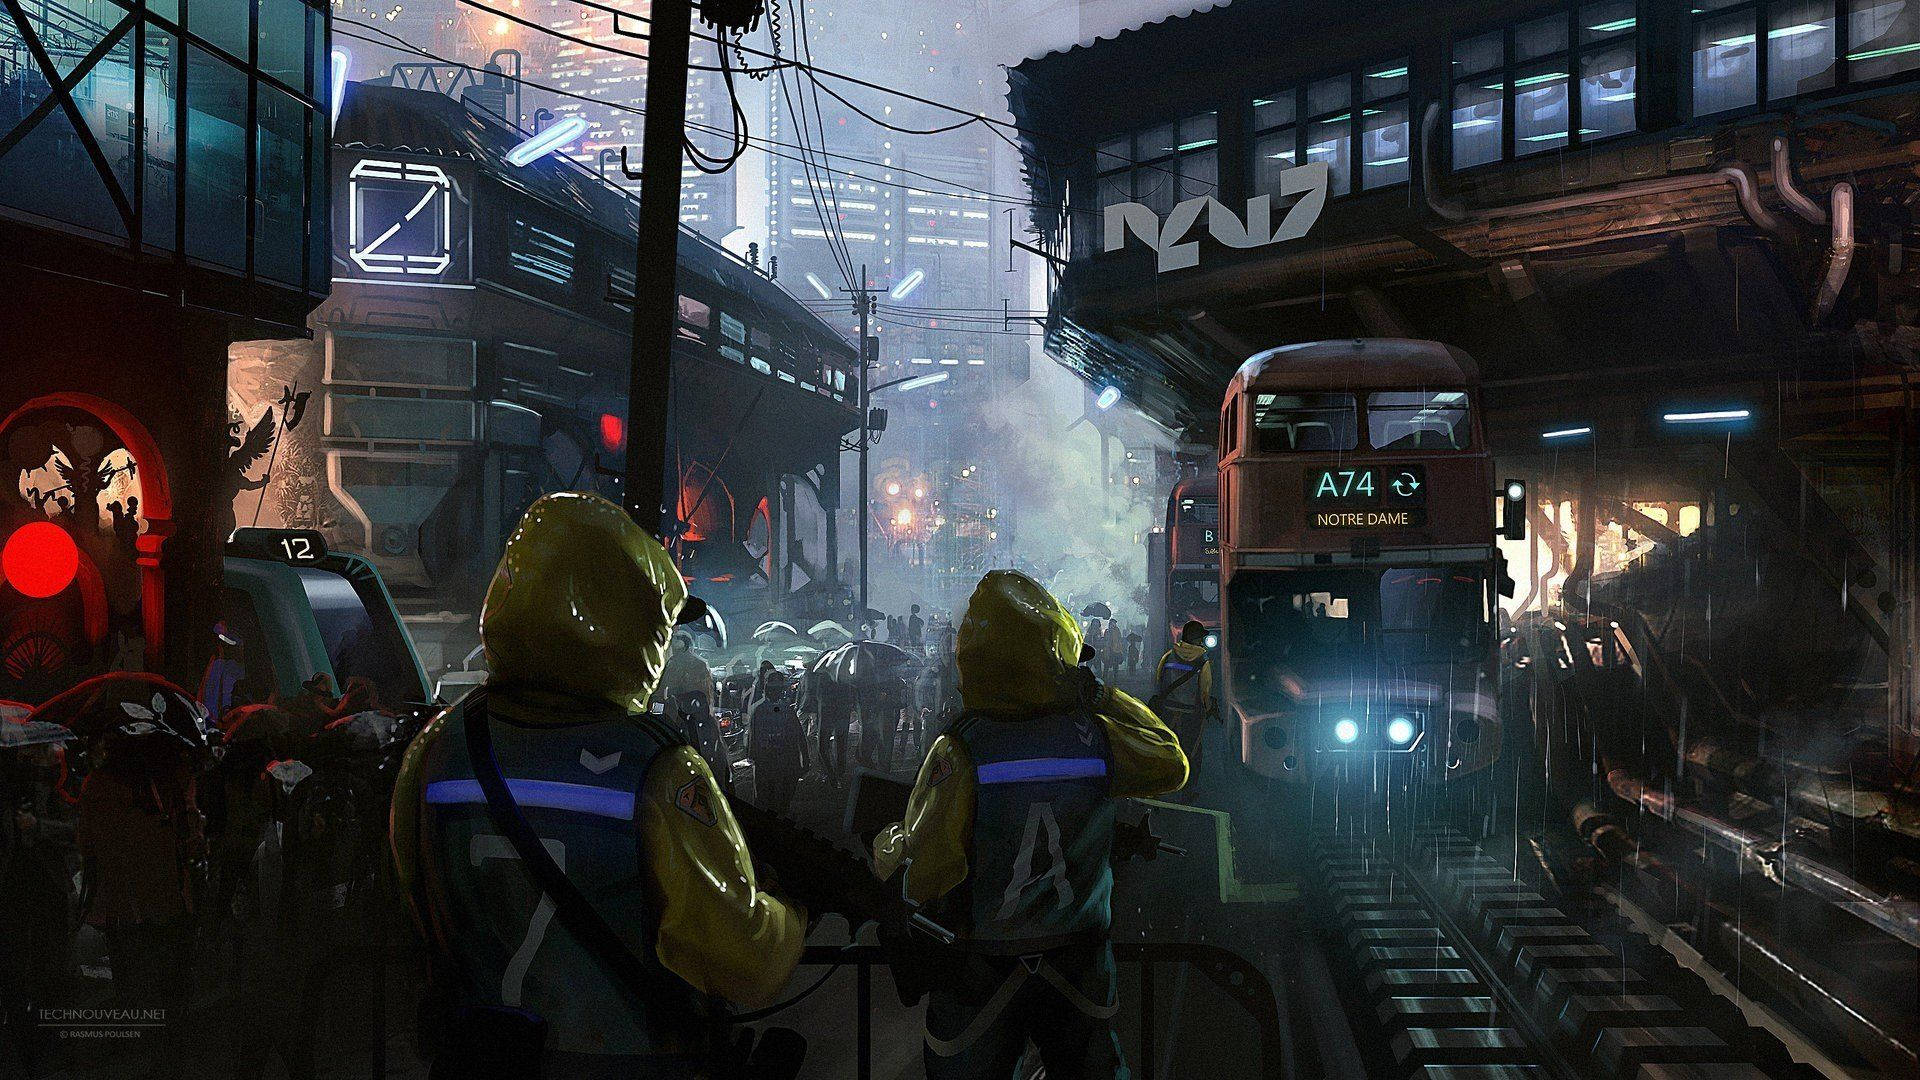 Cyberpunk City Train Station Background